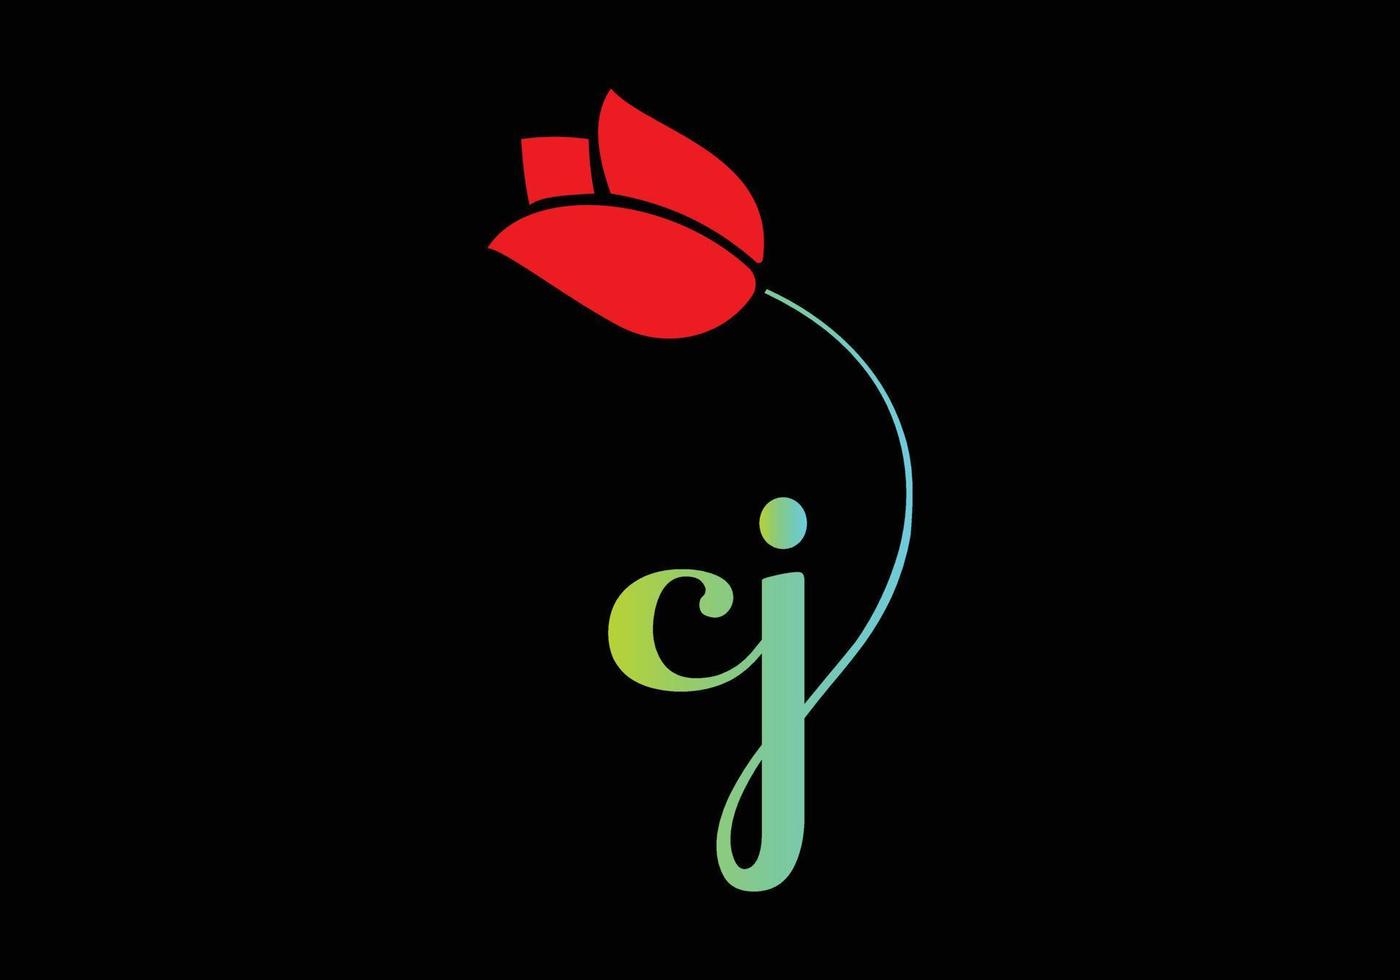 CJ Monograms Rose logo, Luxury Cosmetics Spa Beauty vector template